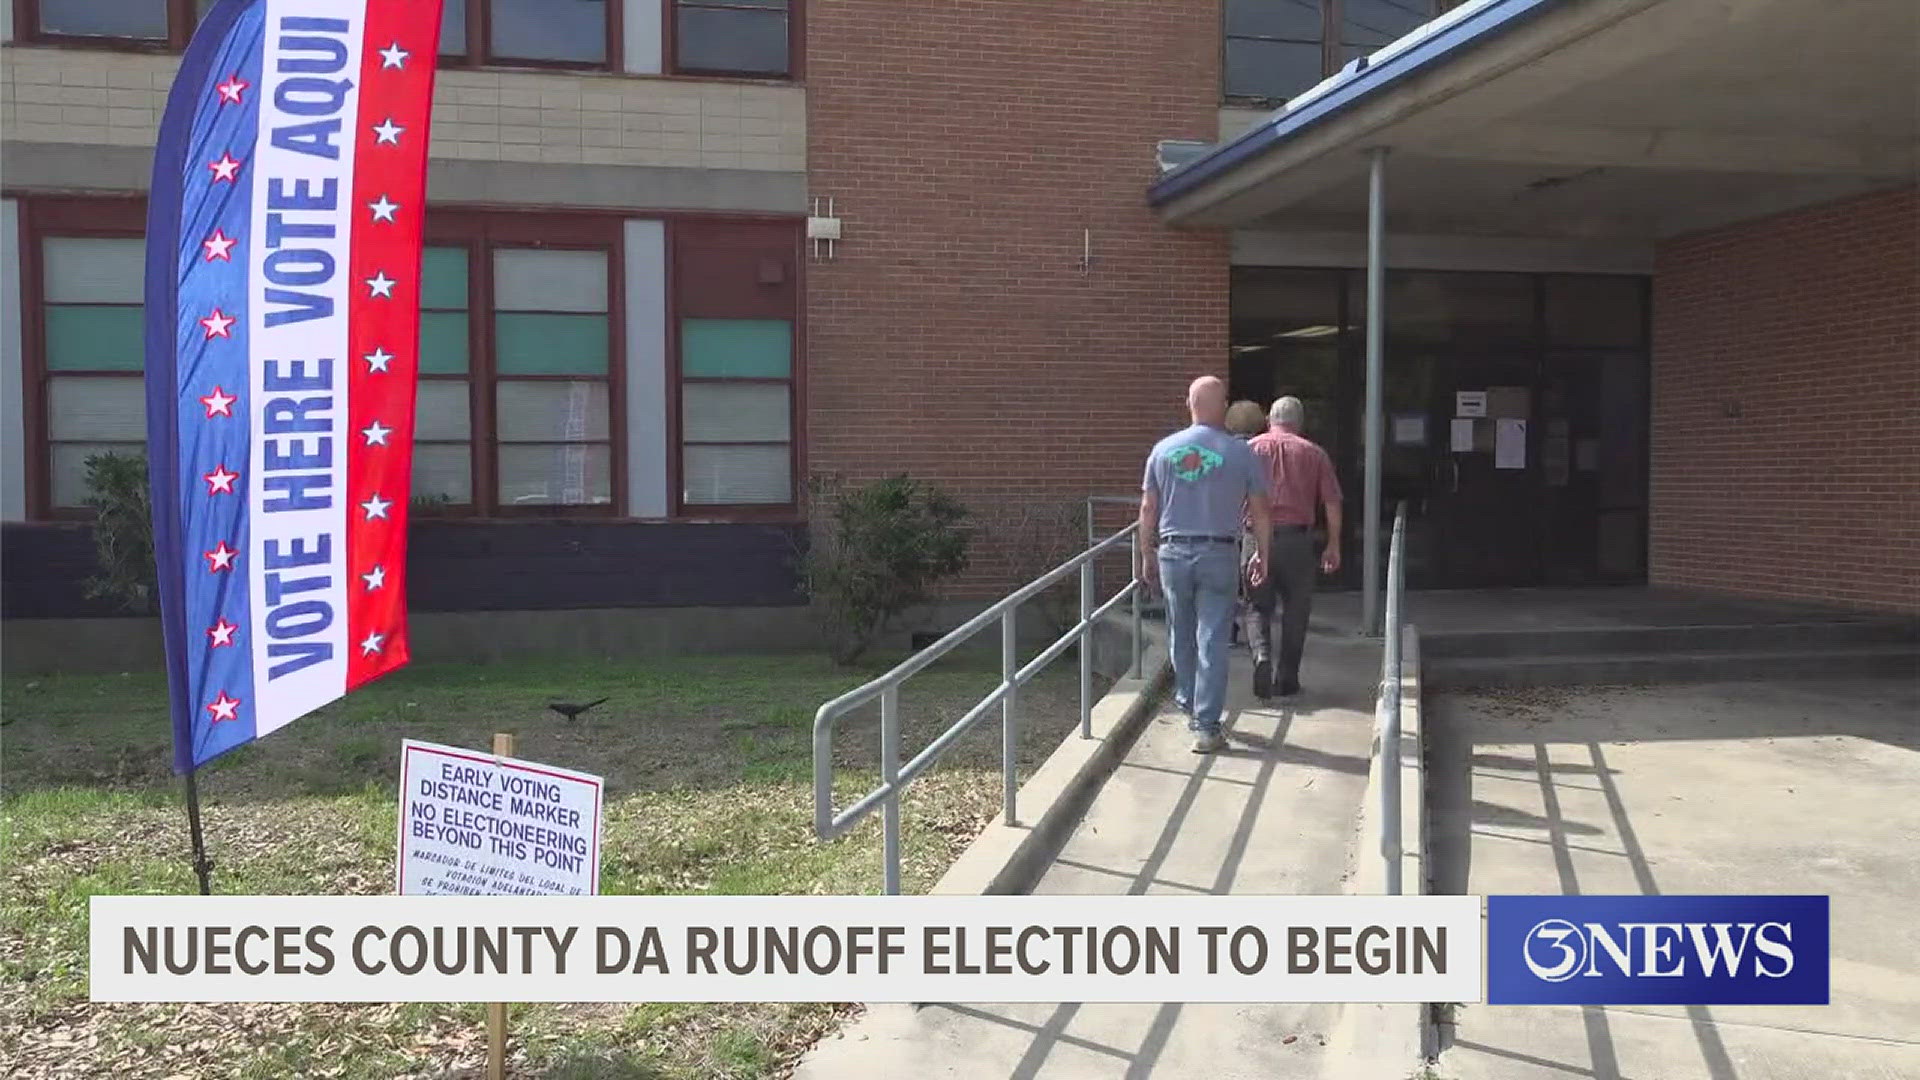 The Nueces County DA runoff election to begin soon.